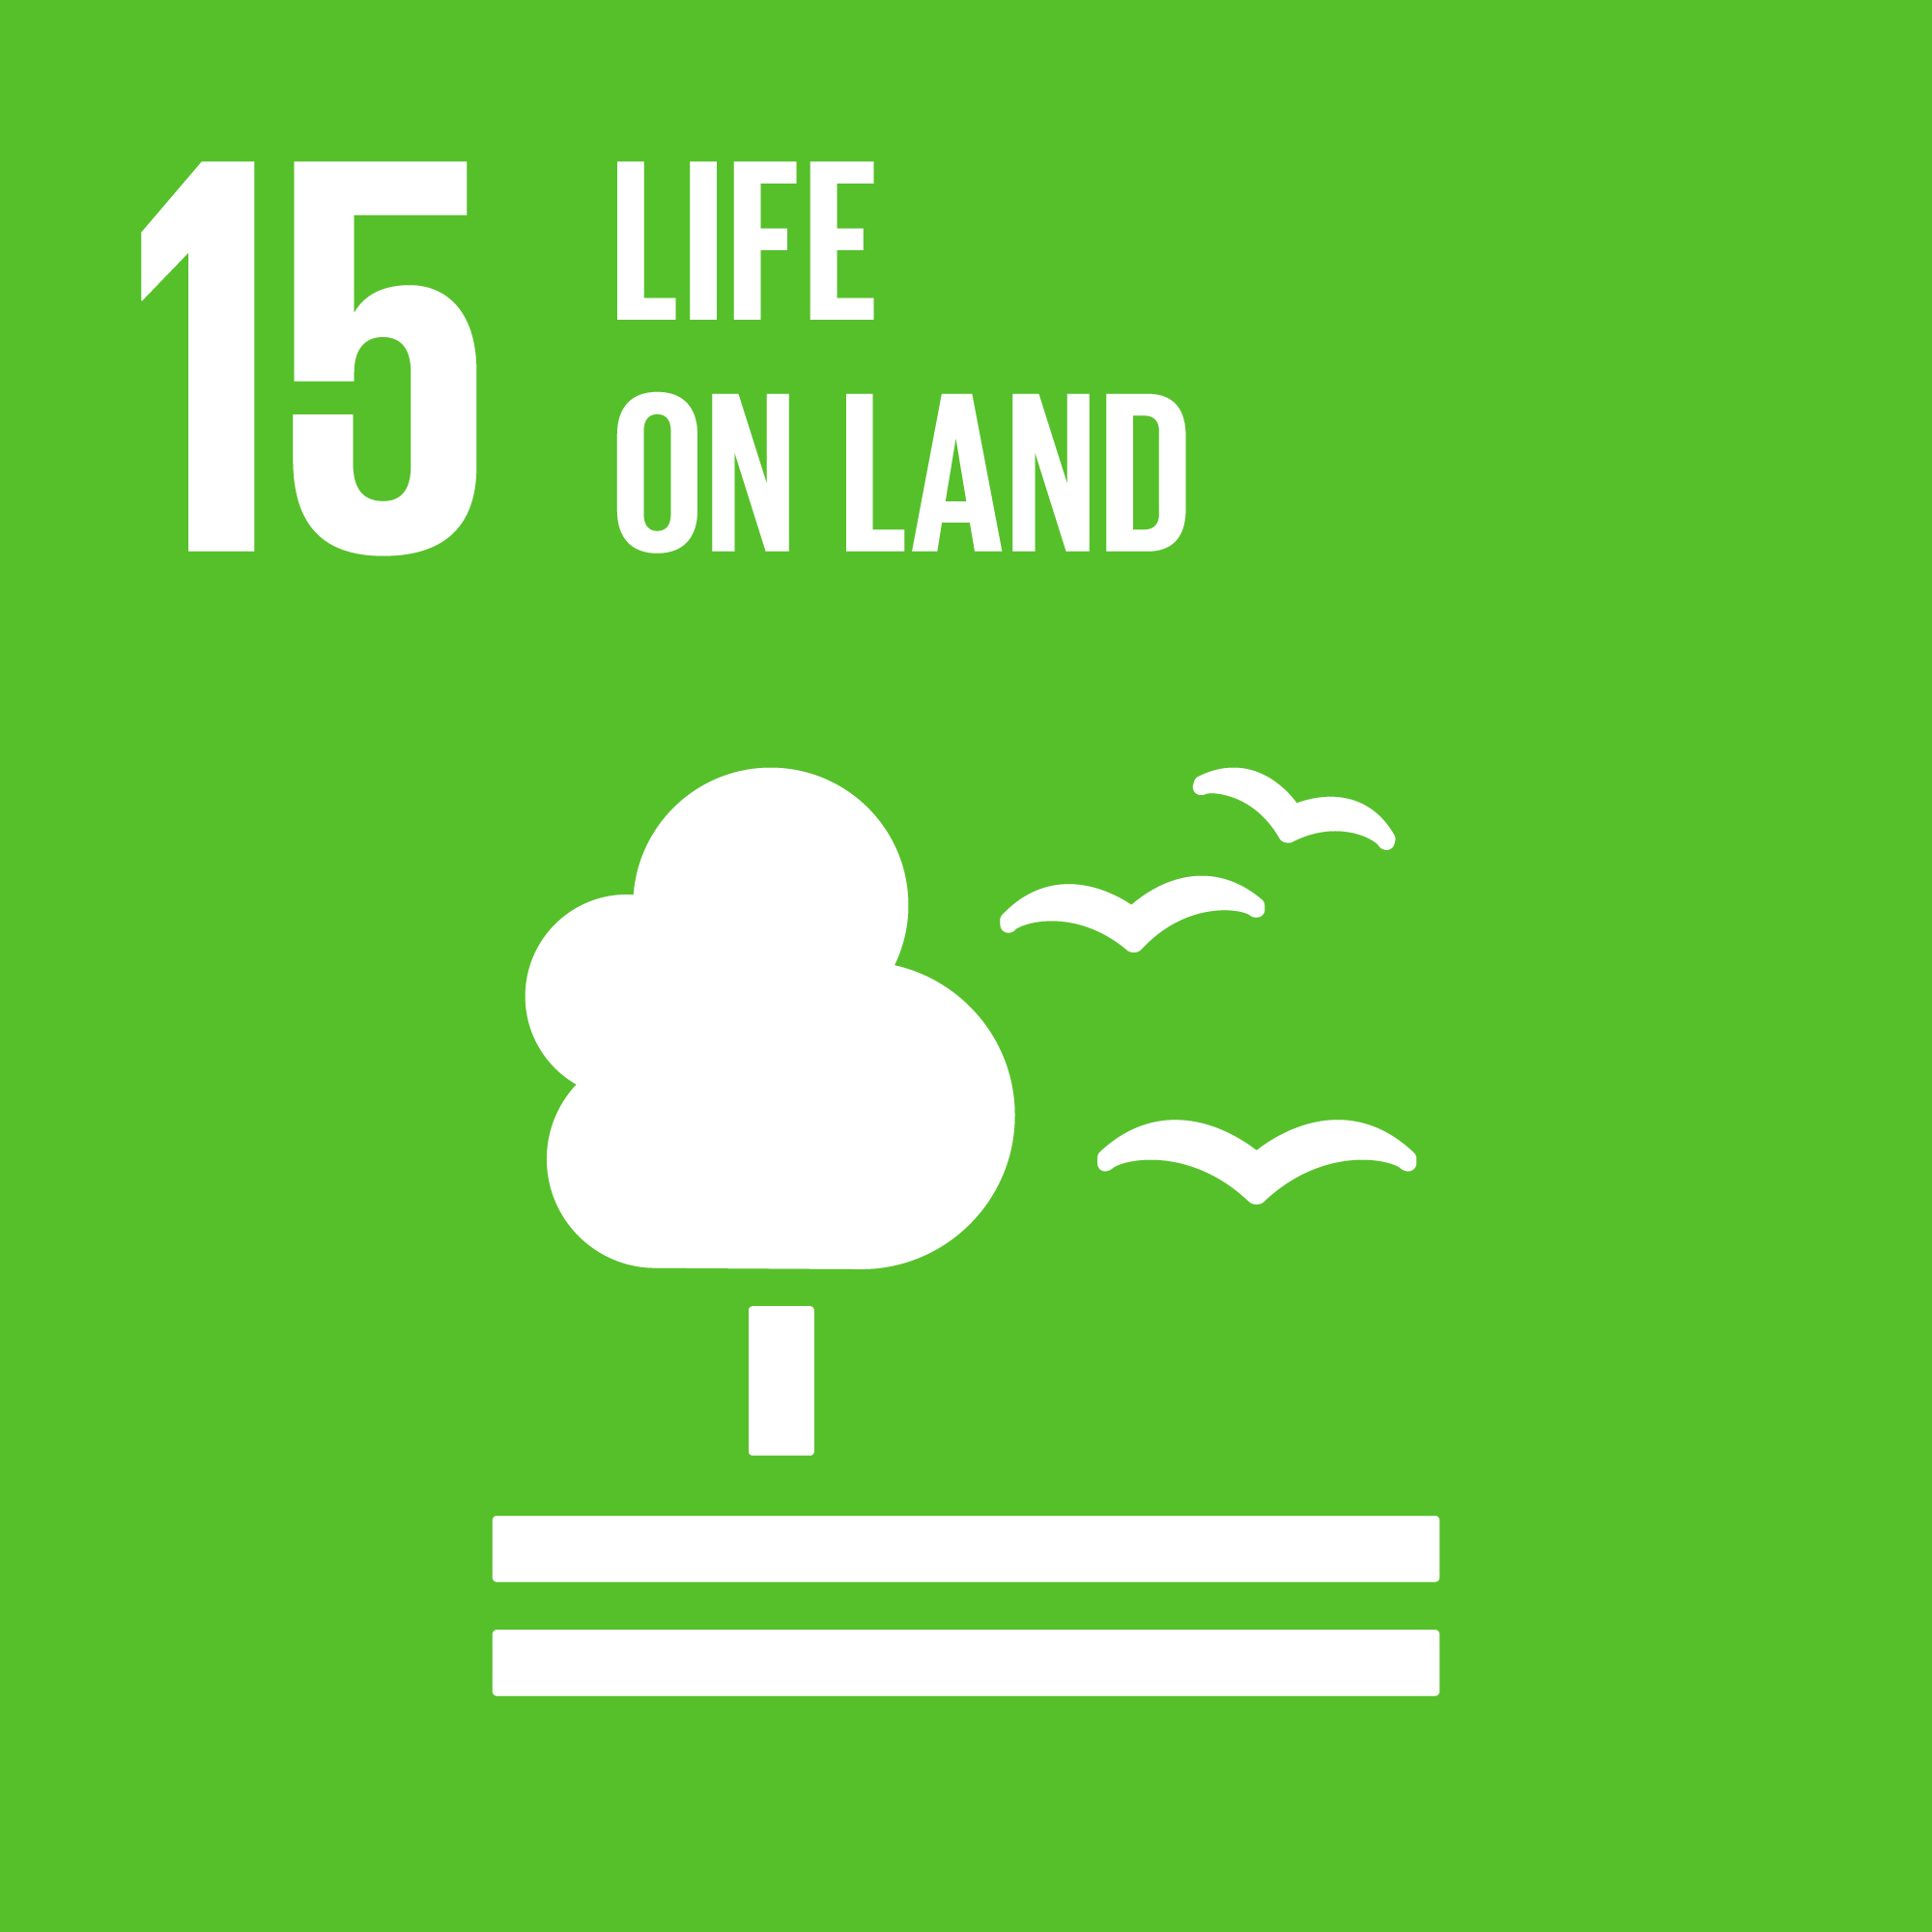 UN SDG 15 Life on Land